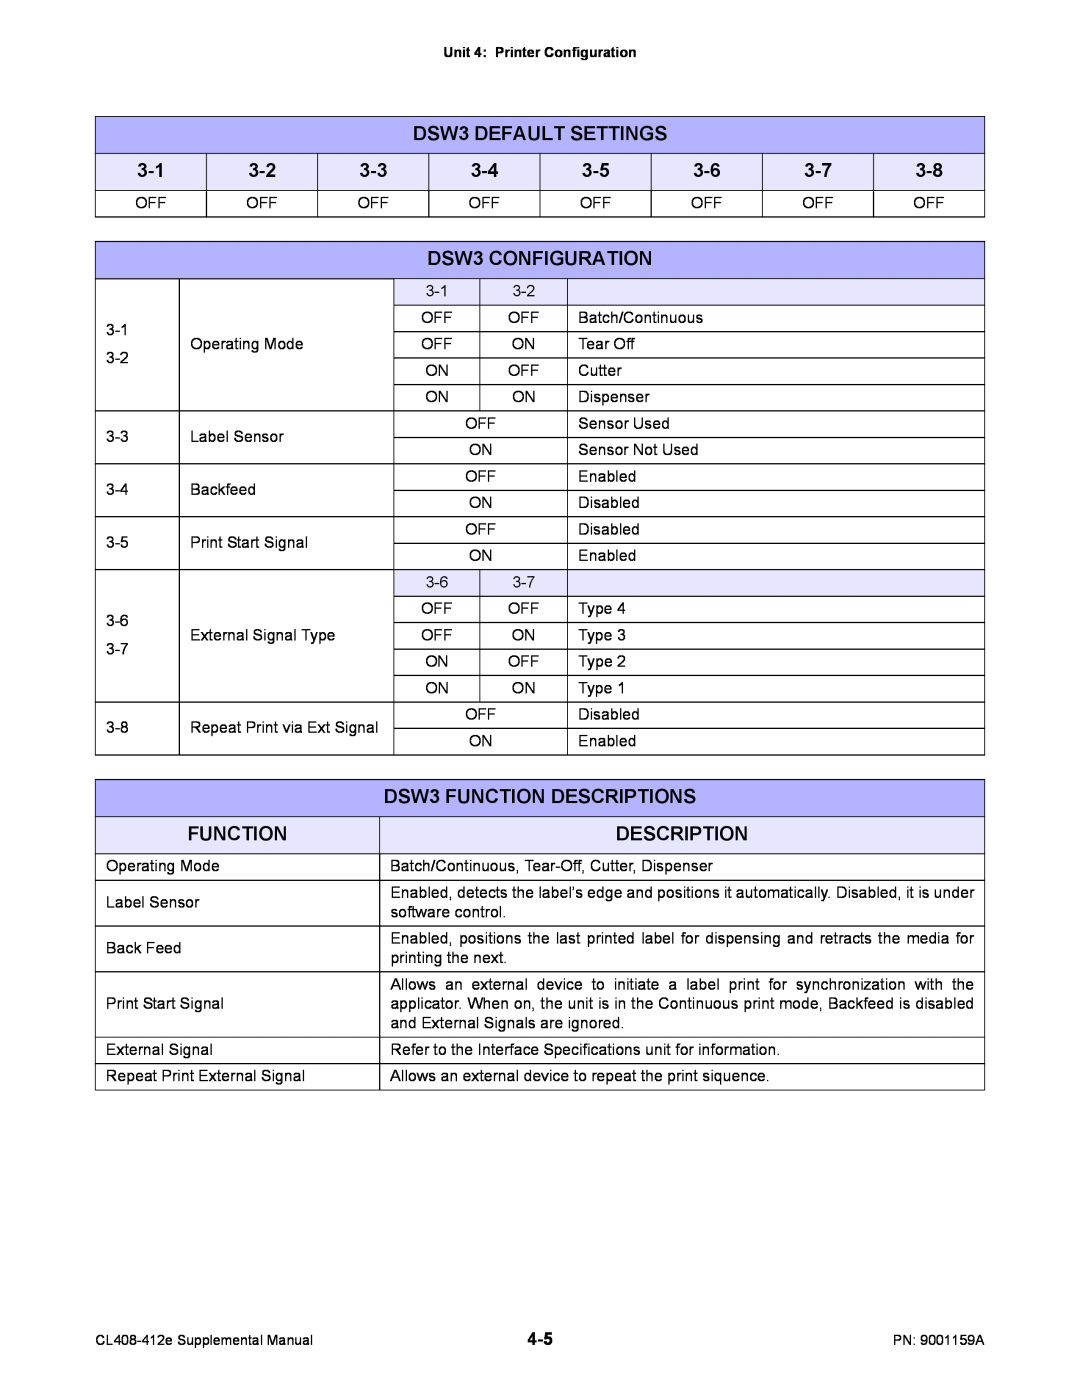 SATO CL408-412e manual DSW3 DEFAULT SETTINGS, Function, Description, DSW3 CONFIGURATION, DSW3 FUNCTION DESCRIPTIONS 